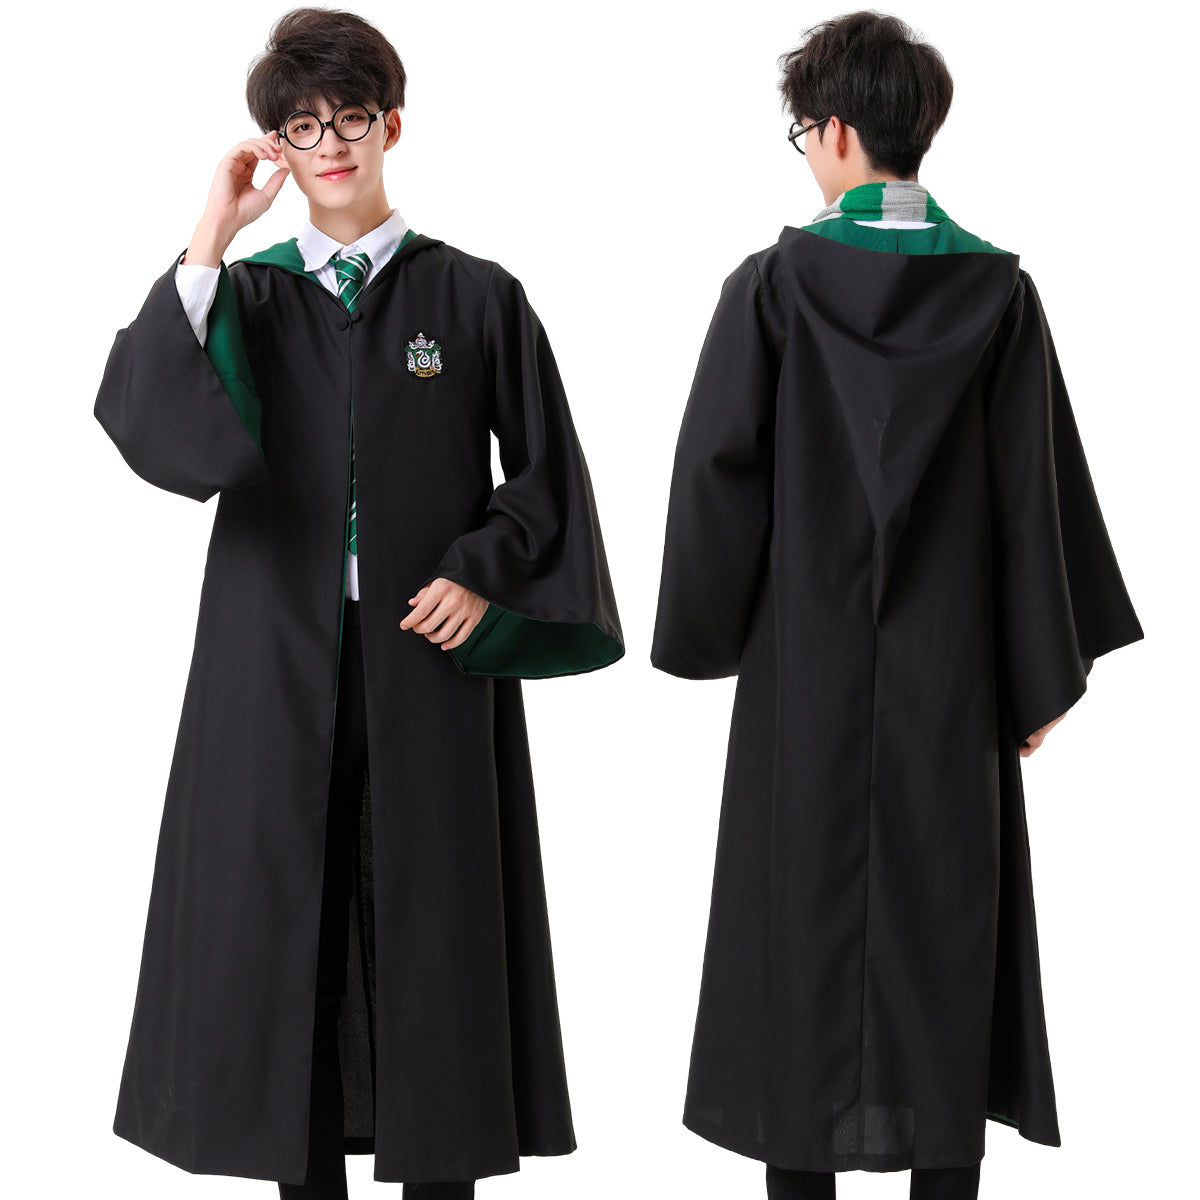 HOLOUN Harry Anime Cosplay Costume Green Robe Cloak Cape Halloween